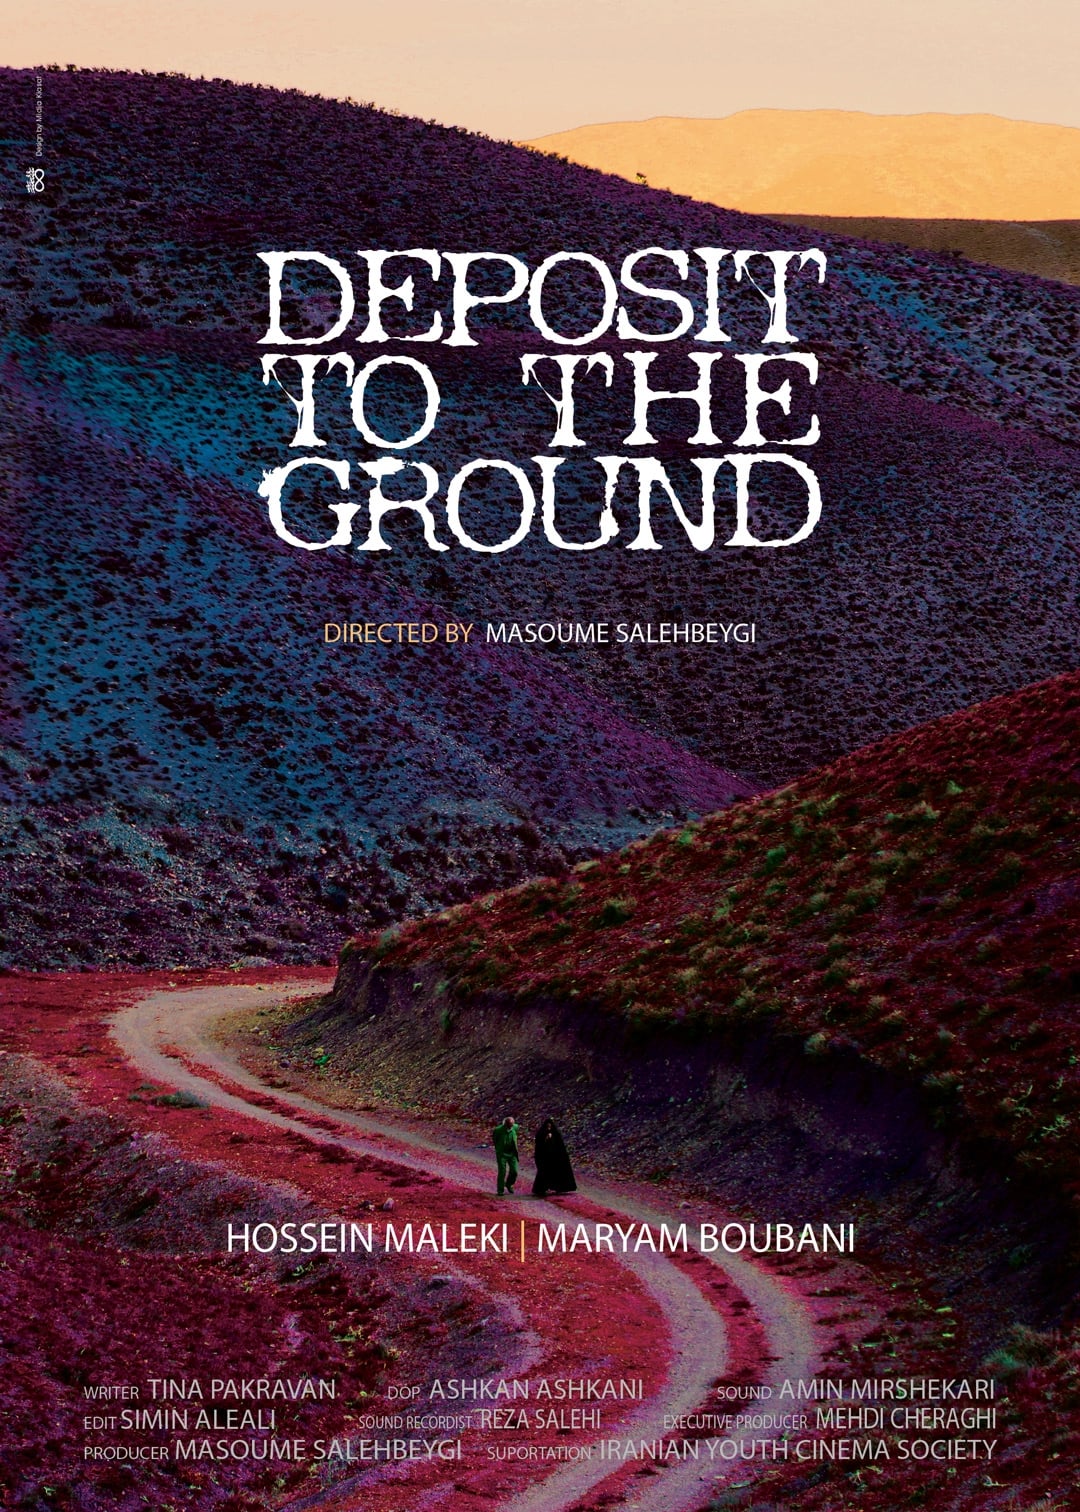 Deposit to the Ground